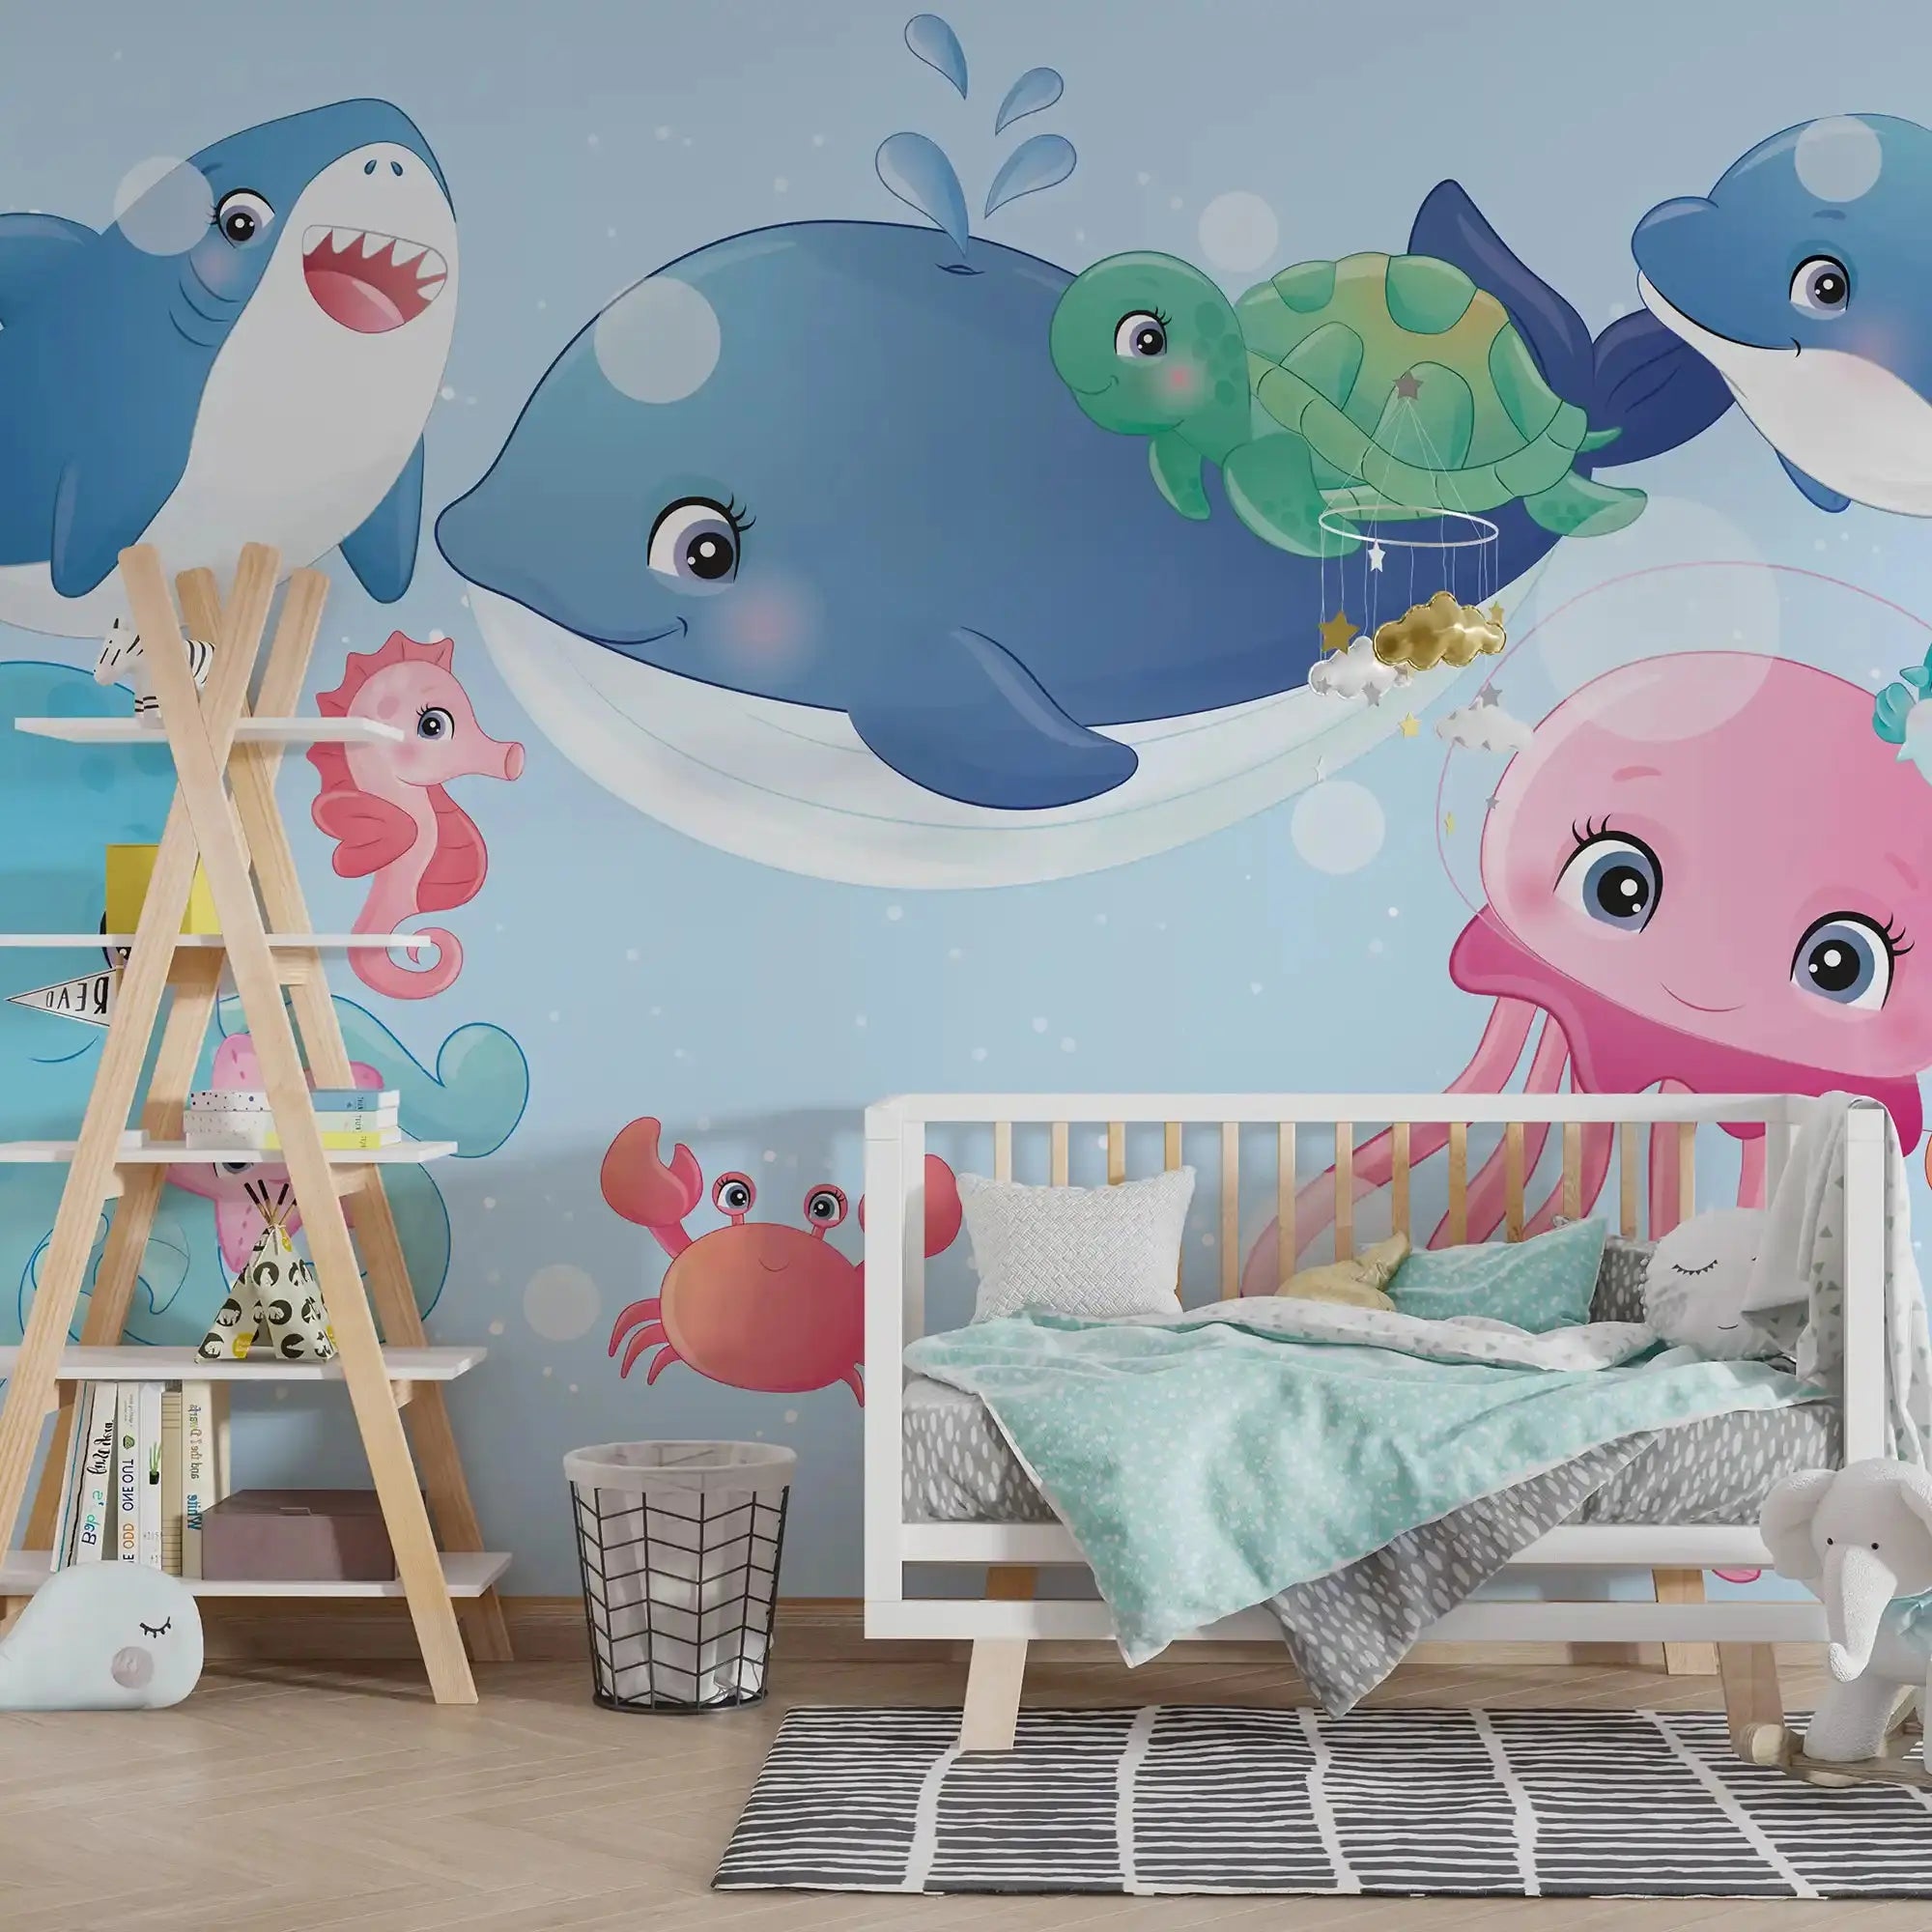 6018 / Nursery Room Peel and Stick Wallpaper: Fun, Removable Under the Sea Animals Mural for Kids Bedroom Decor - Artevella